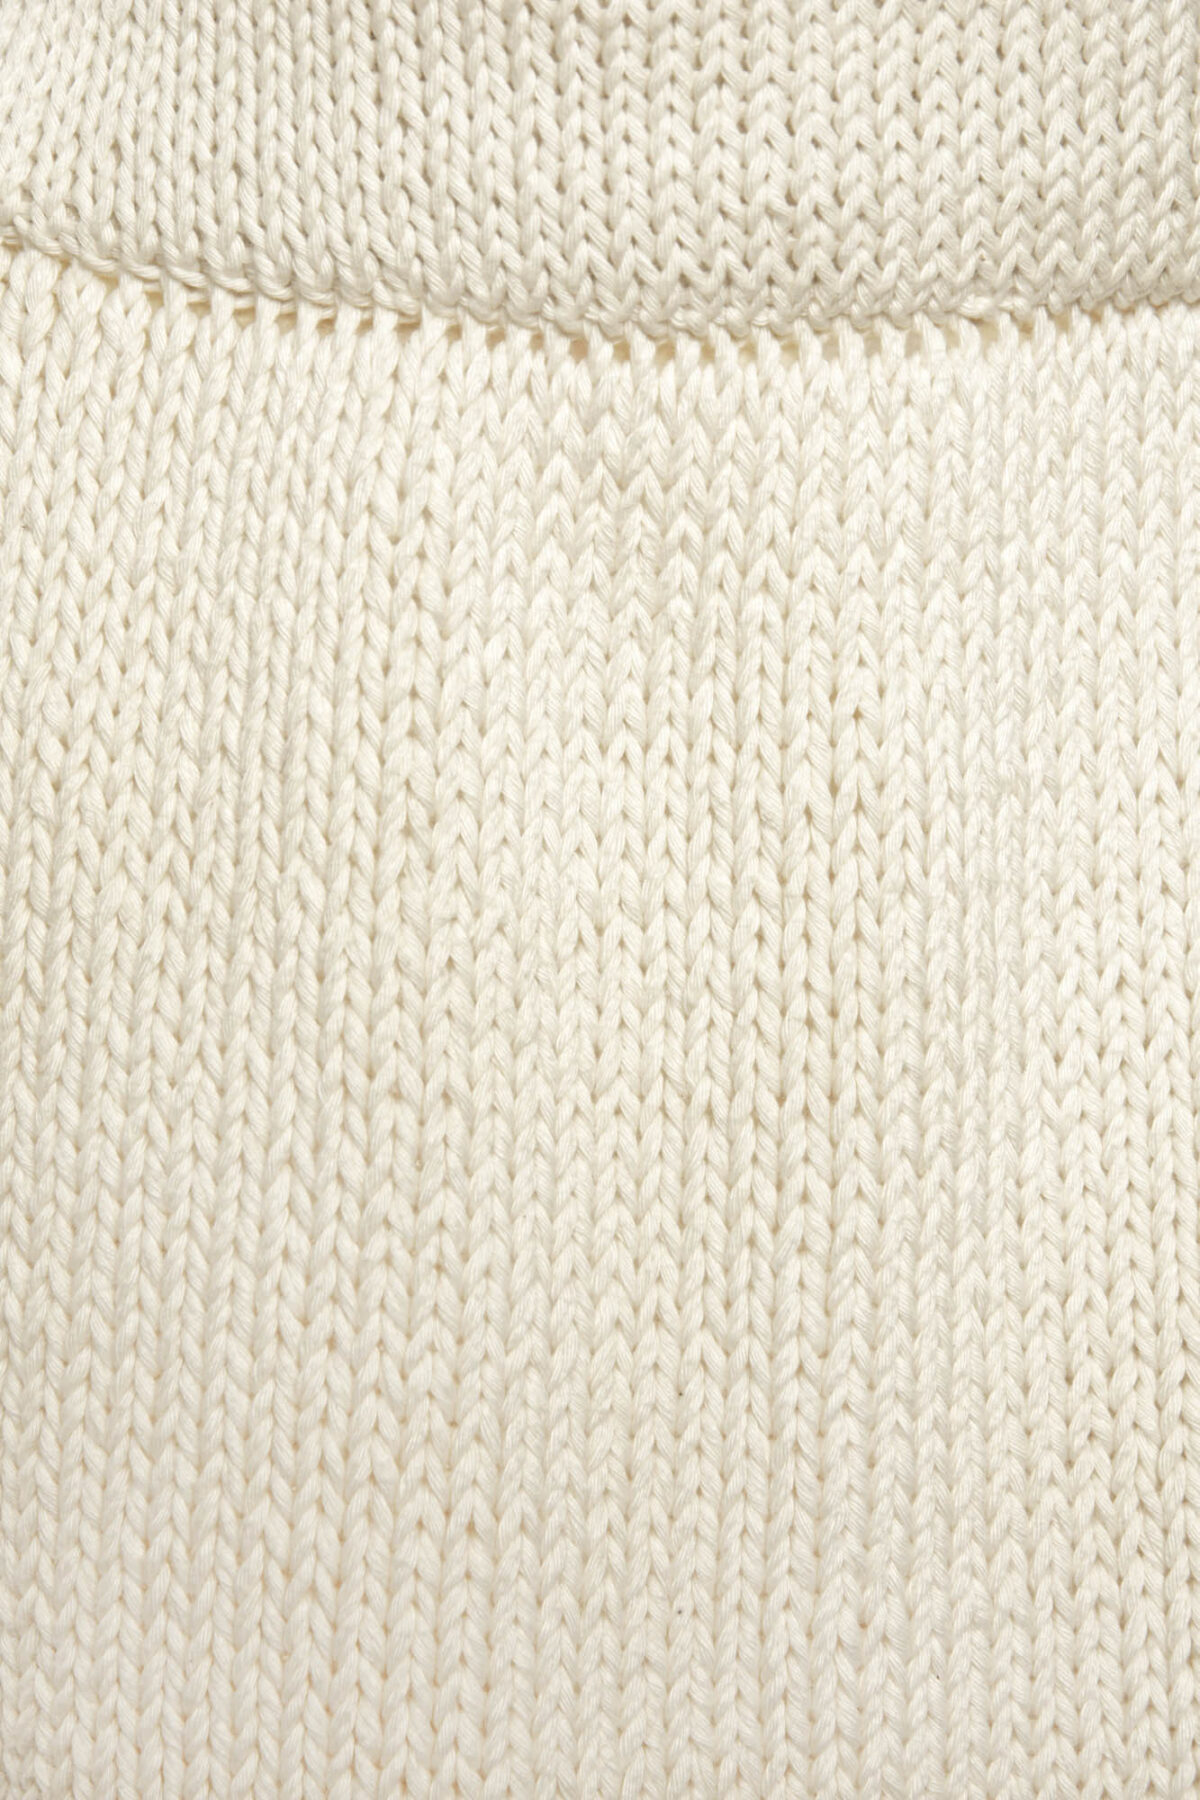 Straight hand-knitted Skirt jersey stitch 